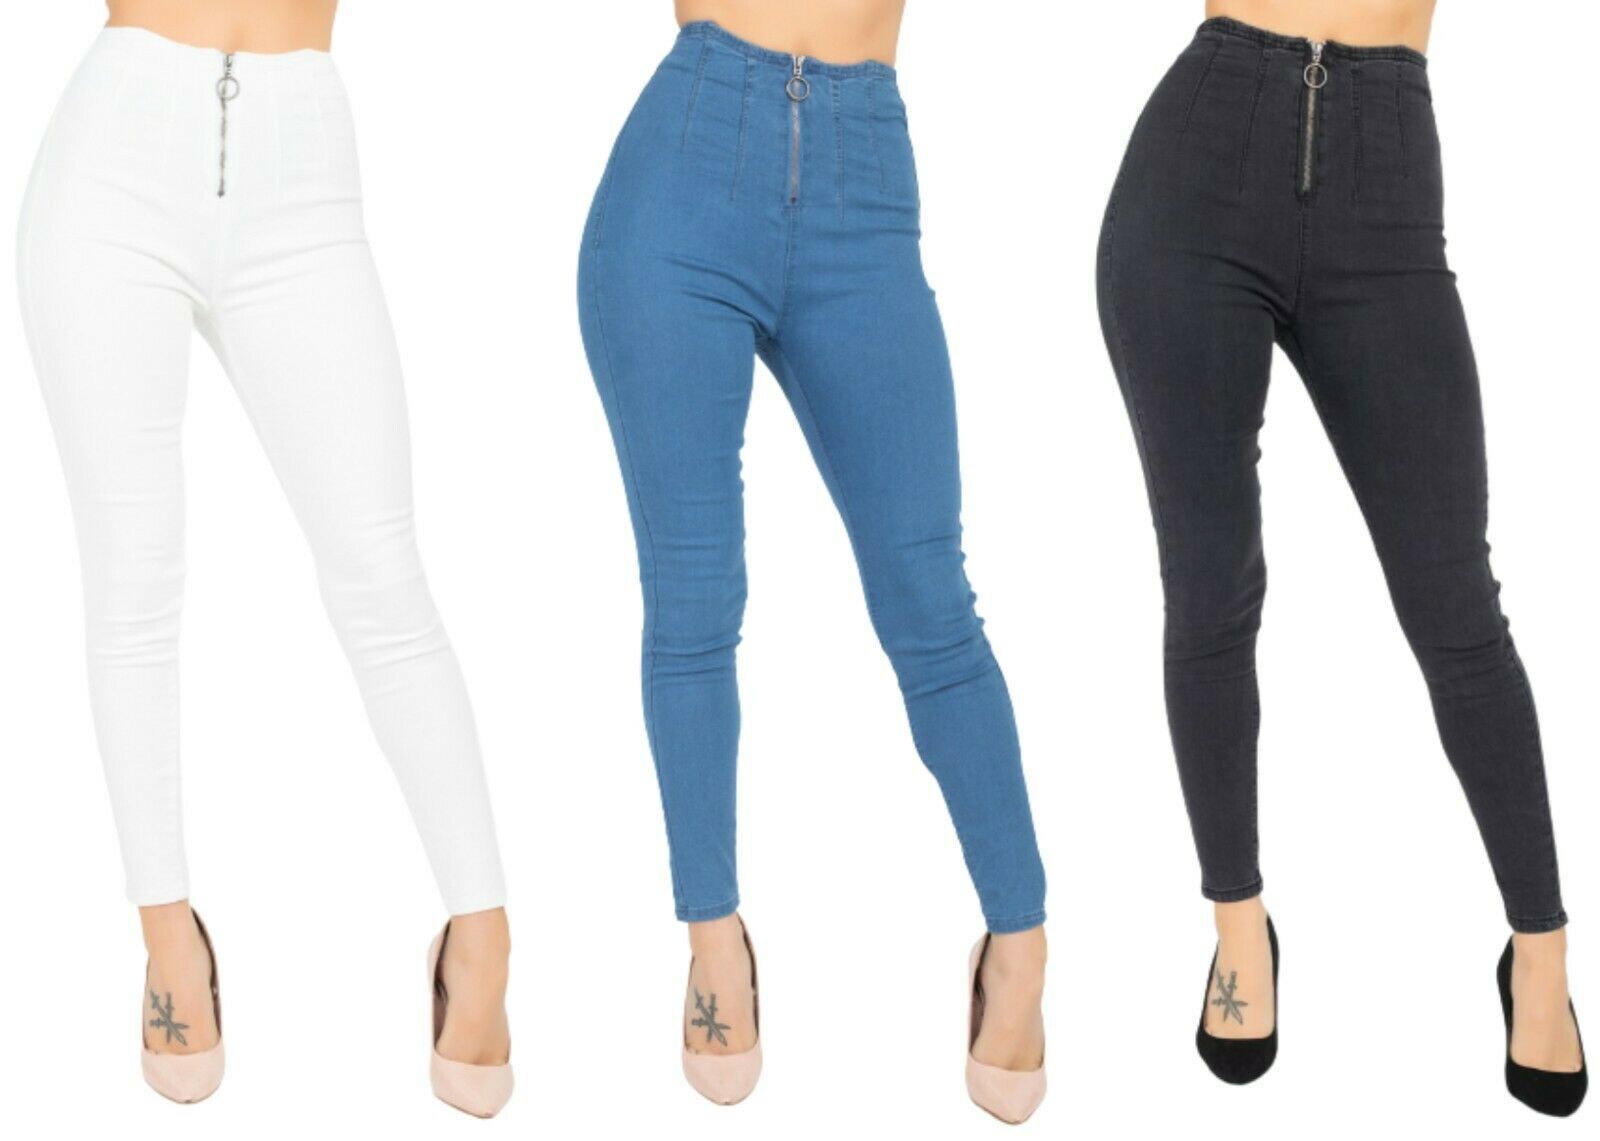 Unbranded - Women stretchy skinny legs front zipper high waist denim jeans jeggings pants